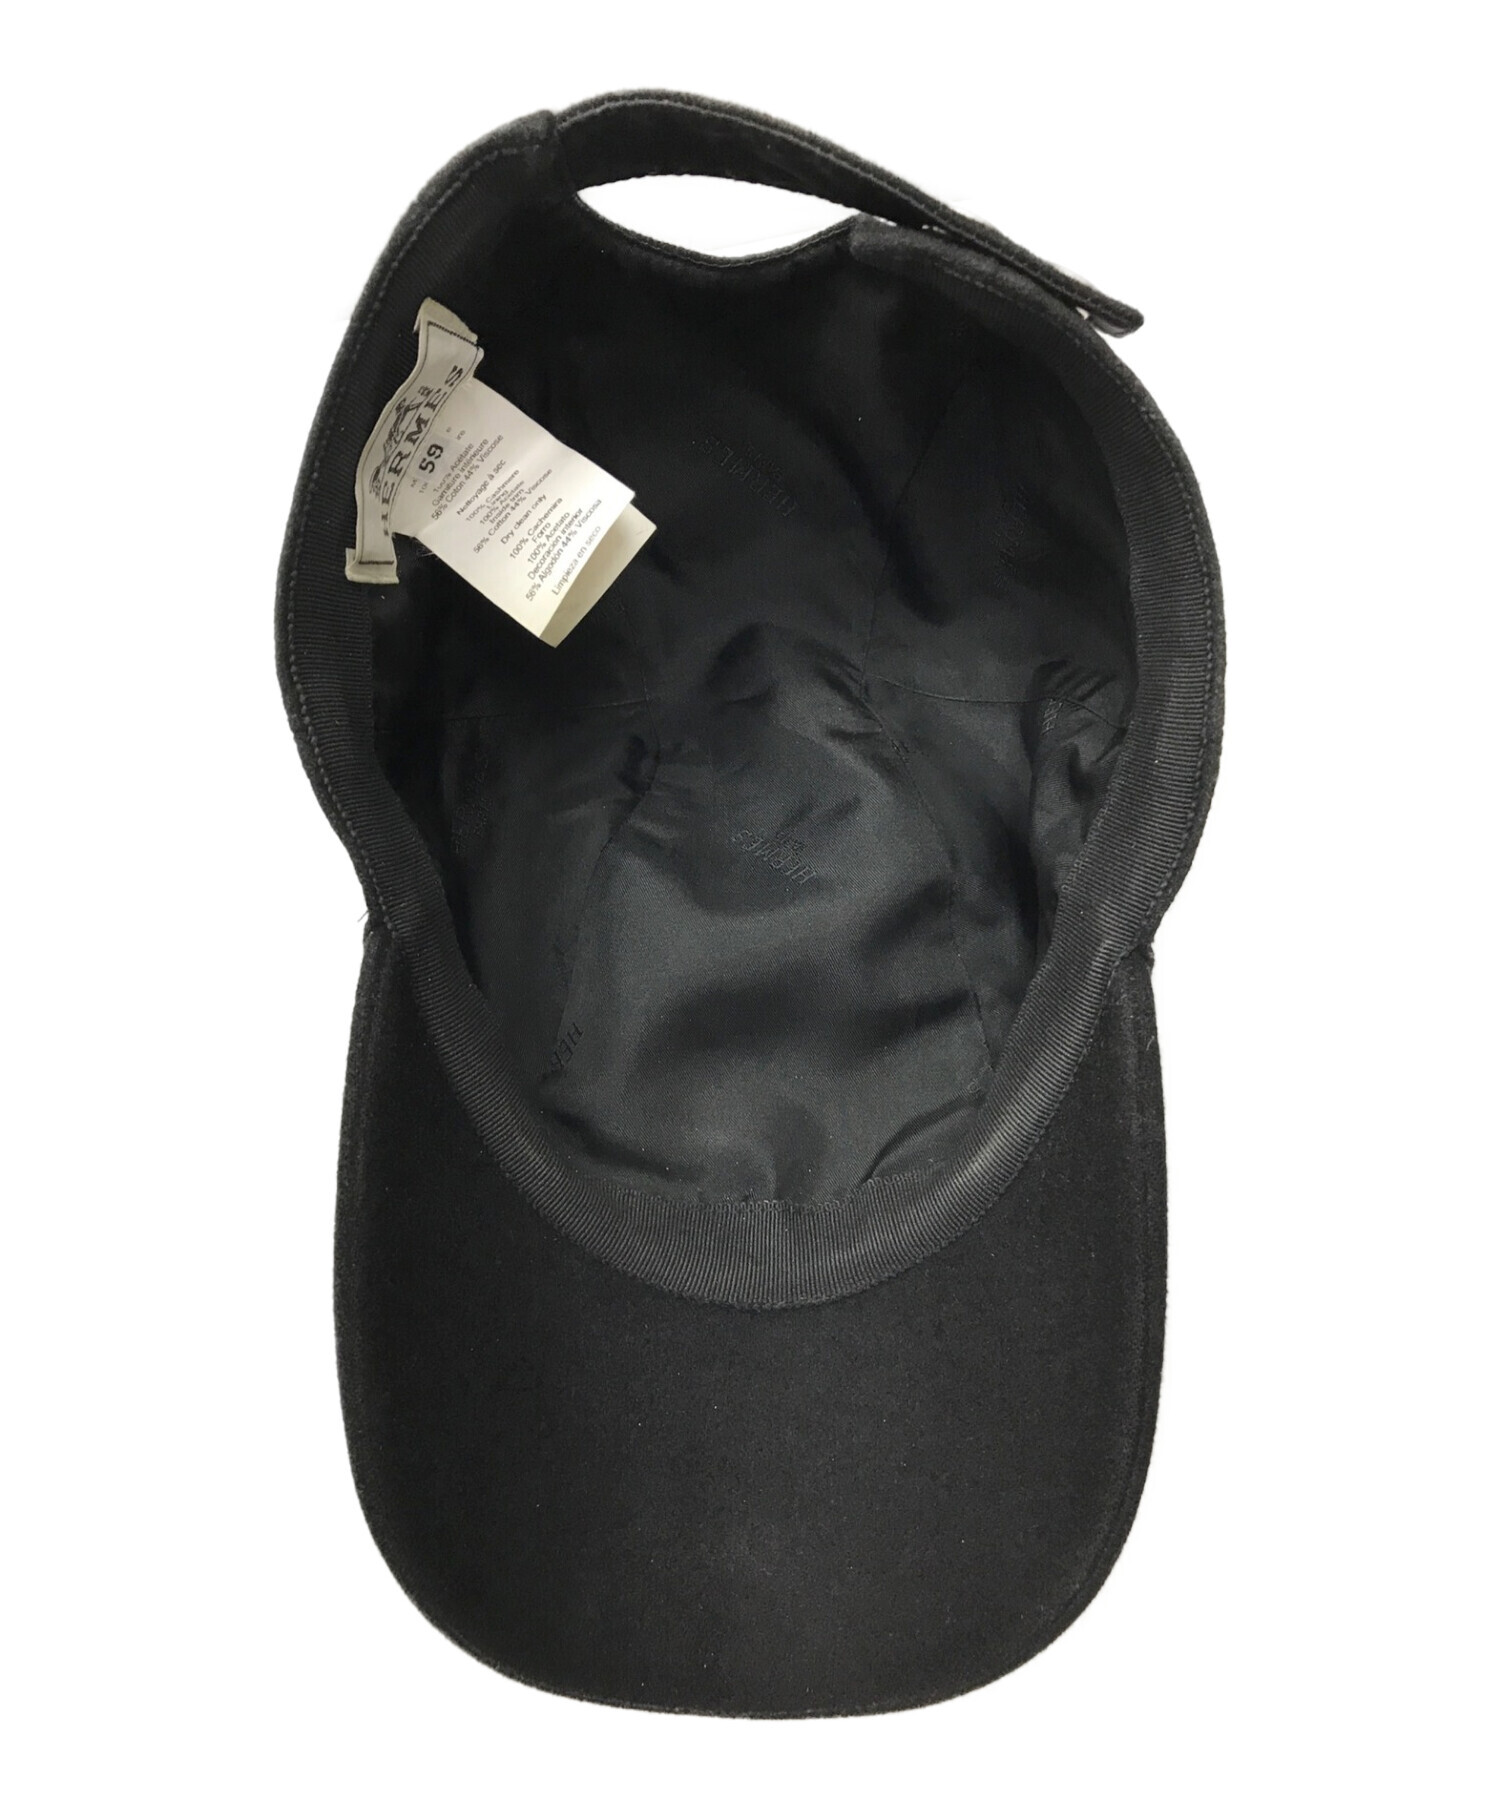 HERMES 帽子 キャップ CAP カシミヤ ブラック 表記サイズ 59